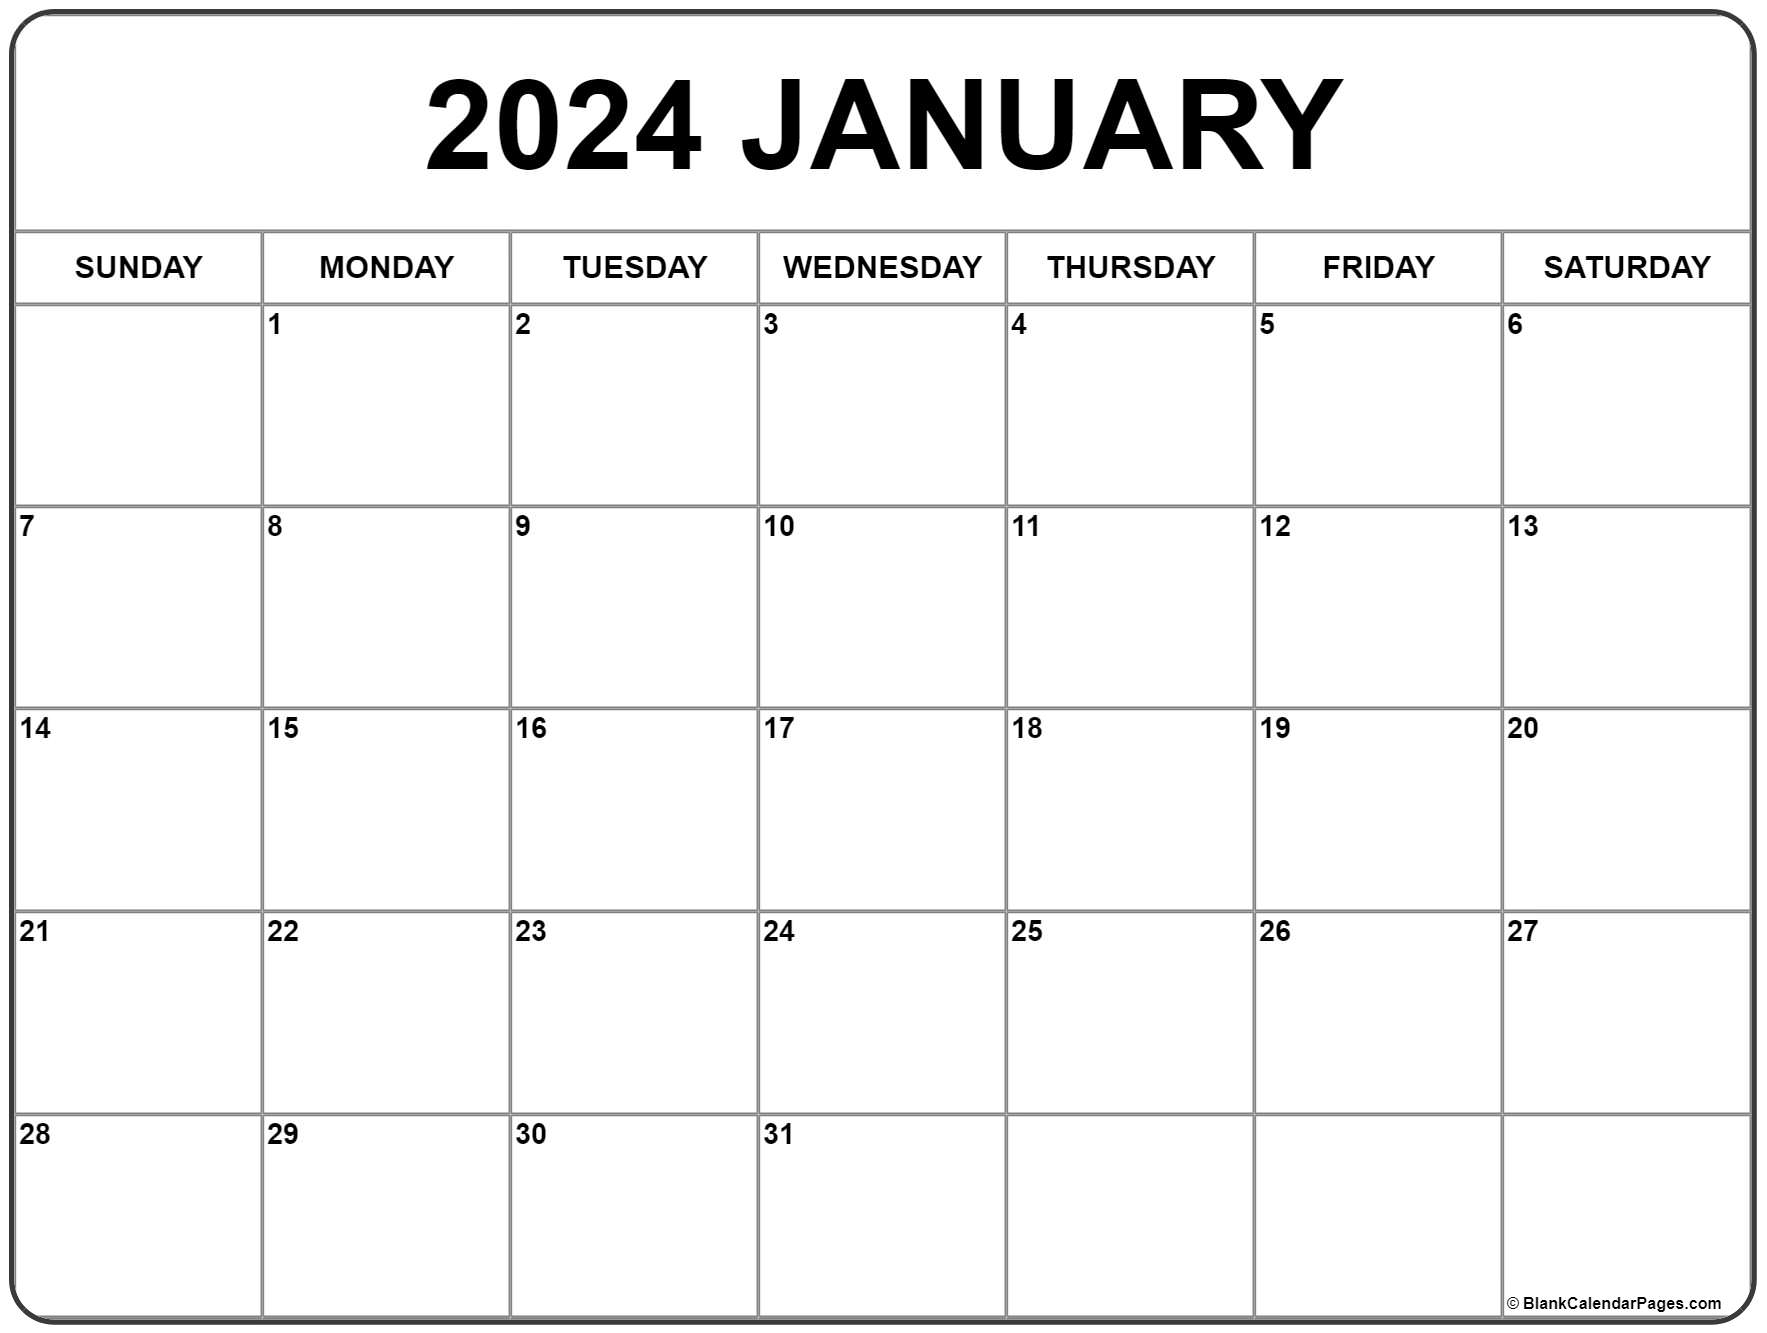 January Printable Calendar 2021 January 2021 calendar | free printable monthly calendars